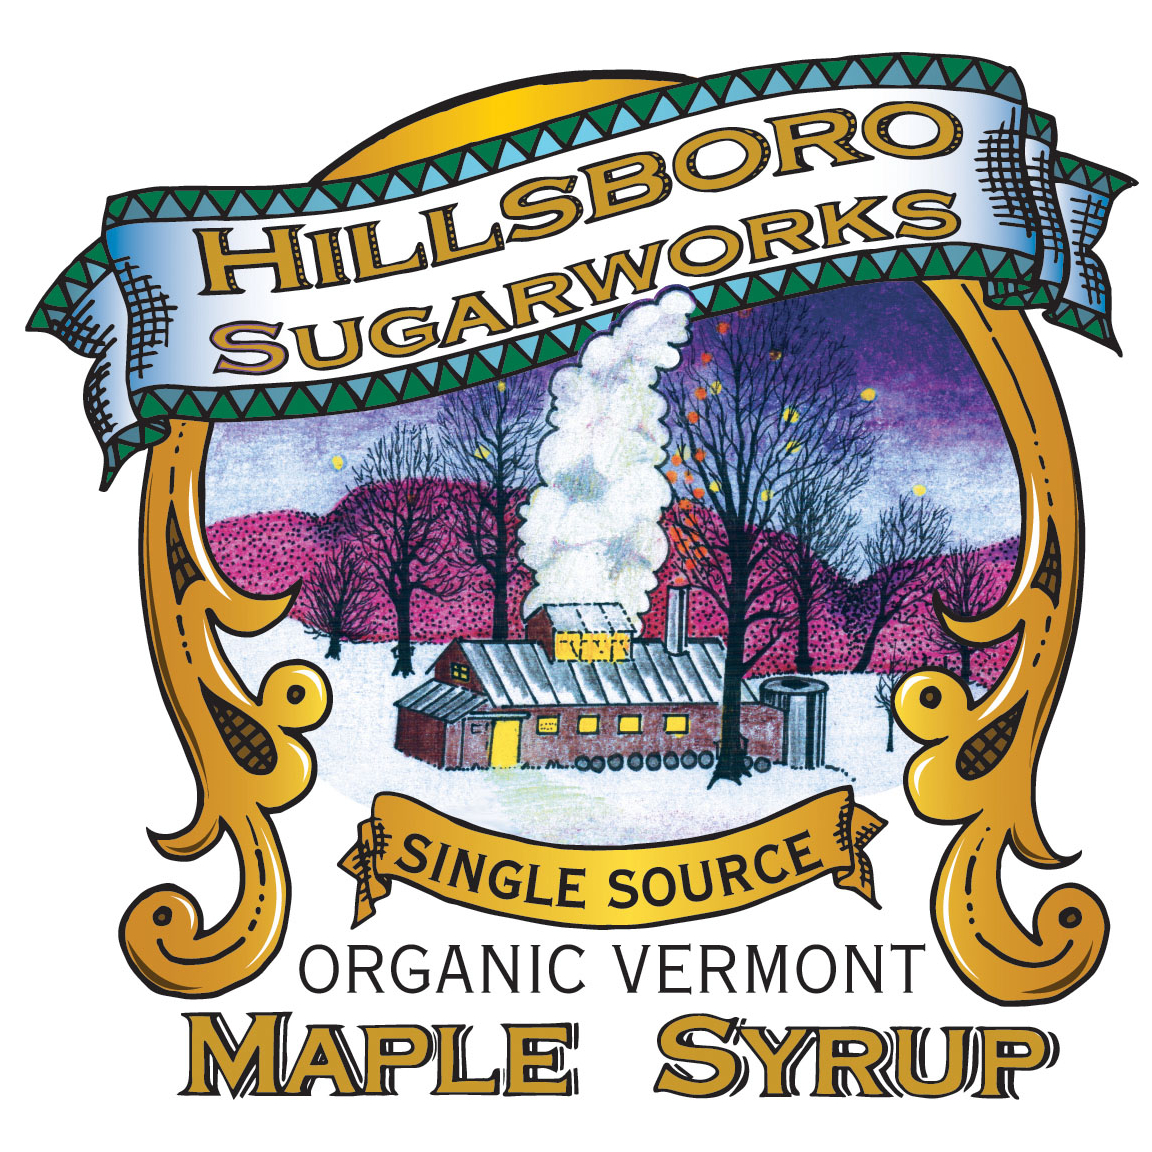 Hillsboro Sugarworks